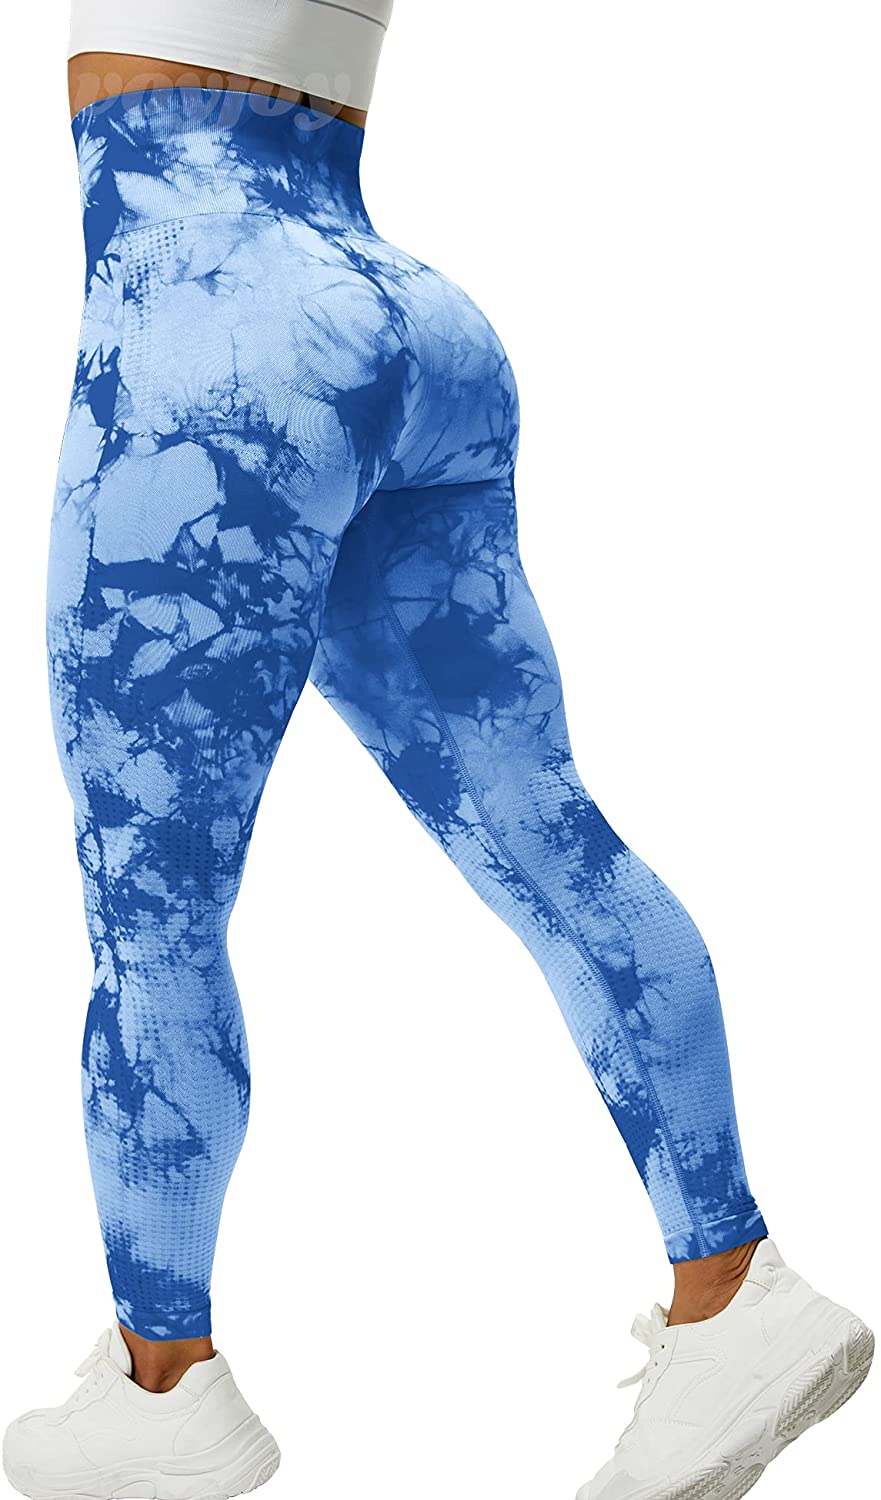 Buy VOYJOY Tie Dye Seamless Leggings for Women High Waist Yoga Pants, Scrunch  Butt Lifting Elastic Tights online